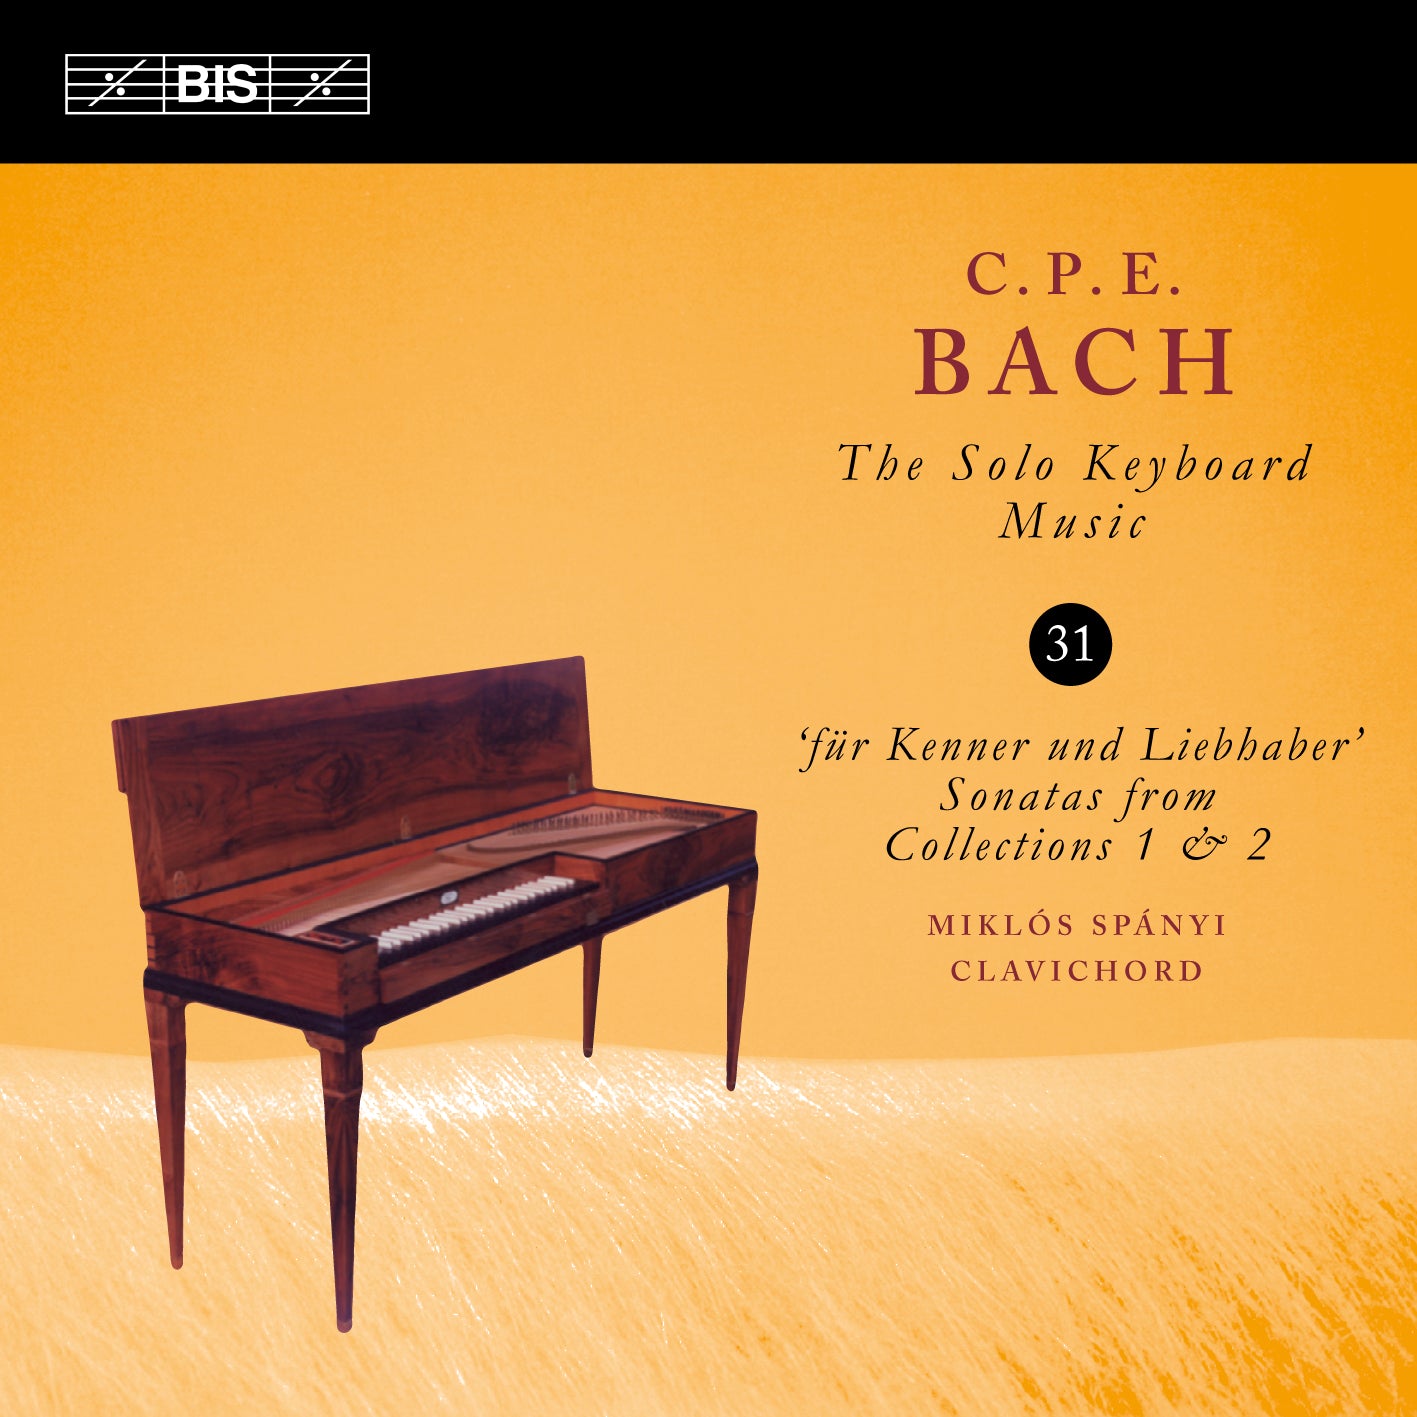 C.P.E. Bach: The Solo Keyboard Music, Vol. 31 / Spanyi